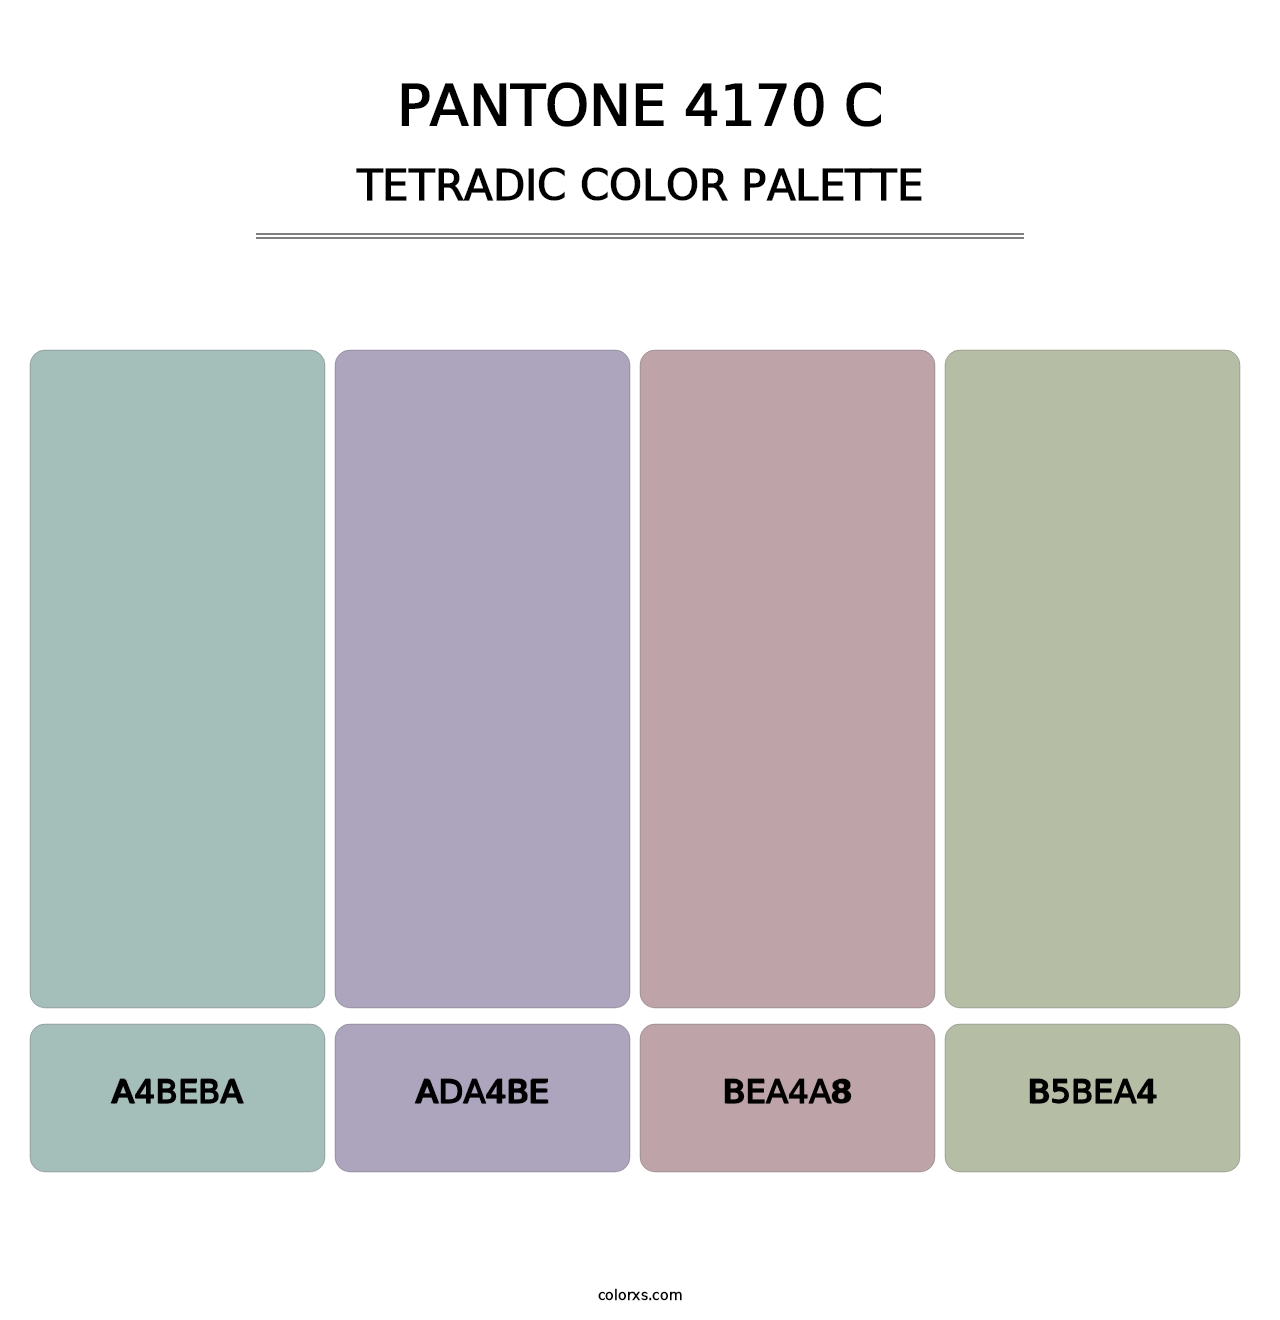 PANTONE 4170 C - Tetradic Color Palette